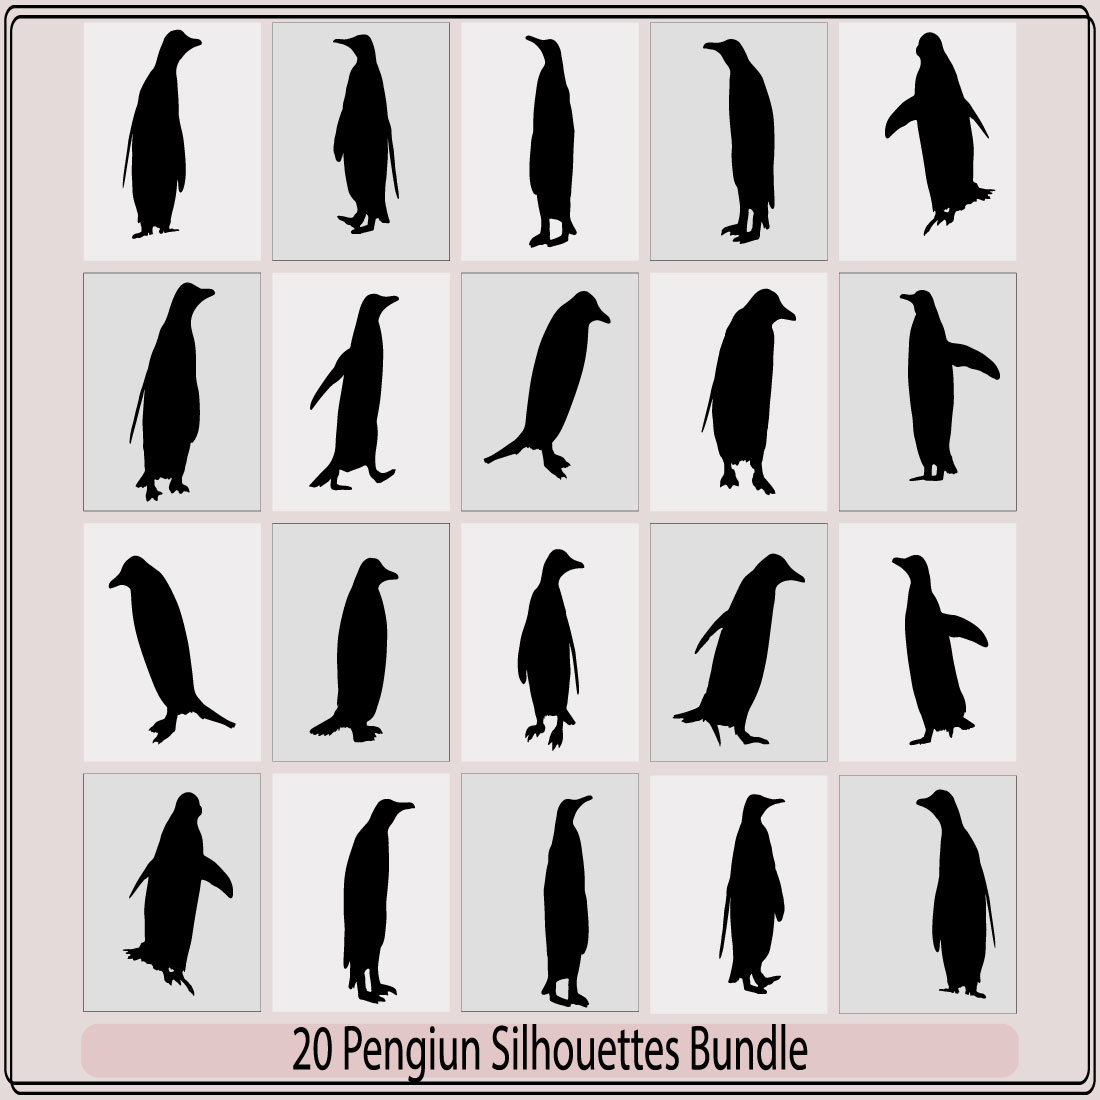 cute penguin silhouette vector design illustration,Vector illustration of a black silhouette of a penguin,Penguins Silhouette Set,collection of penguins' silhouettes preview image.